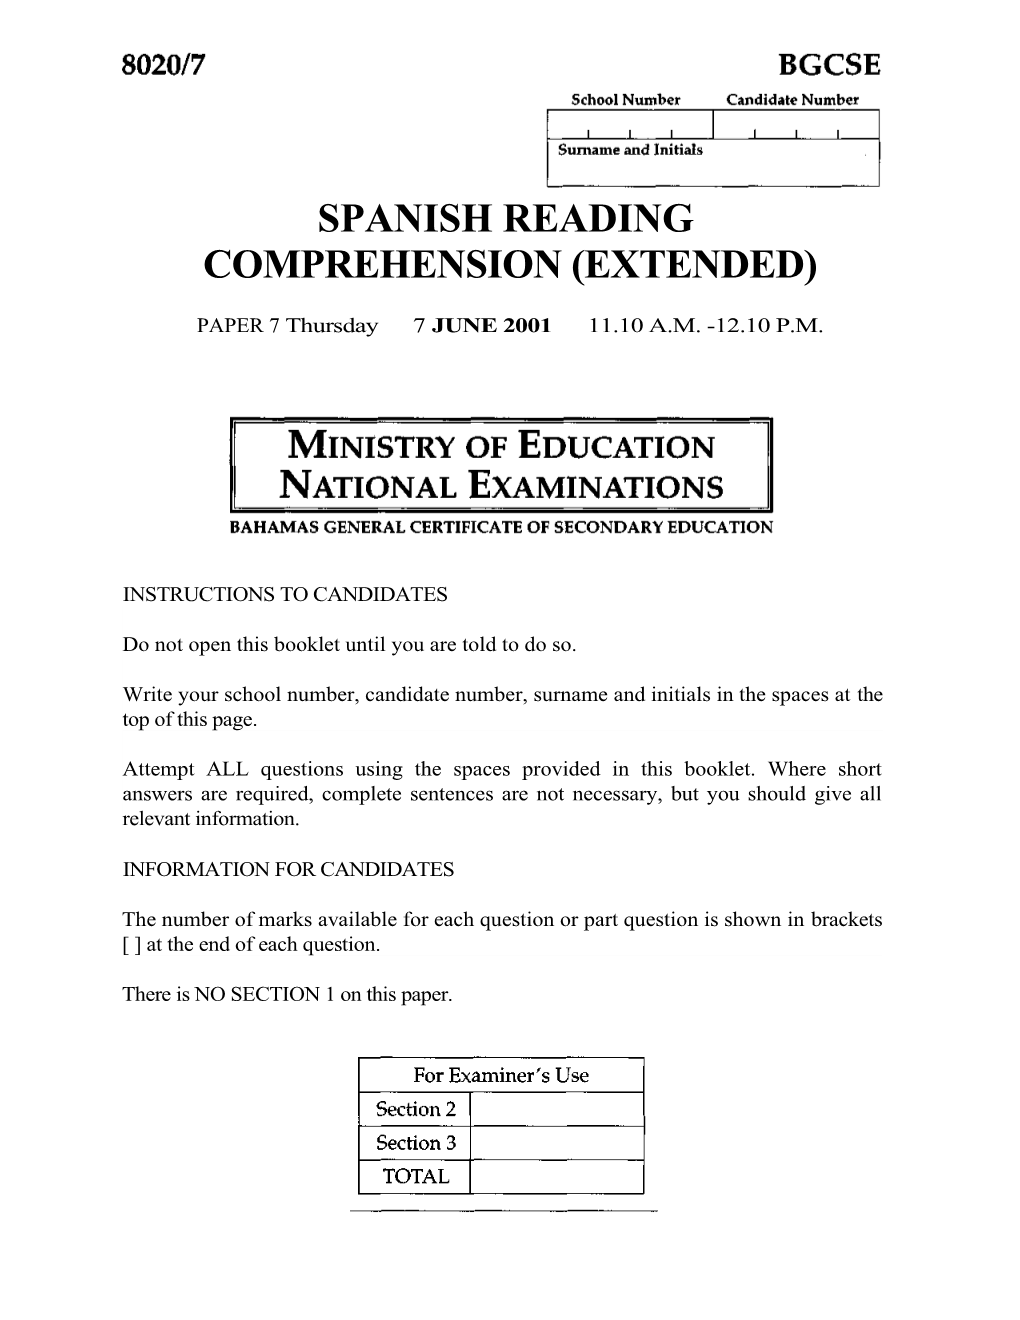 Spanish Reading